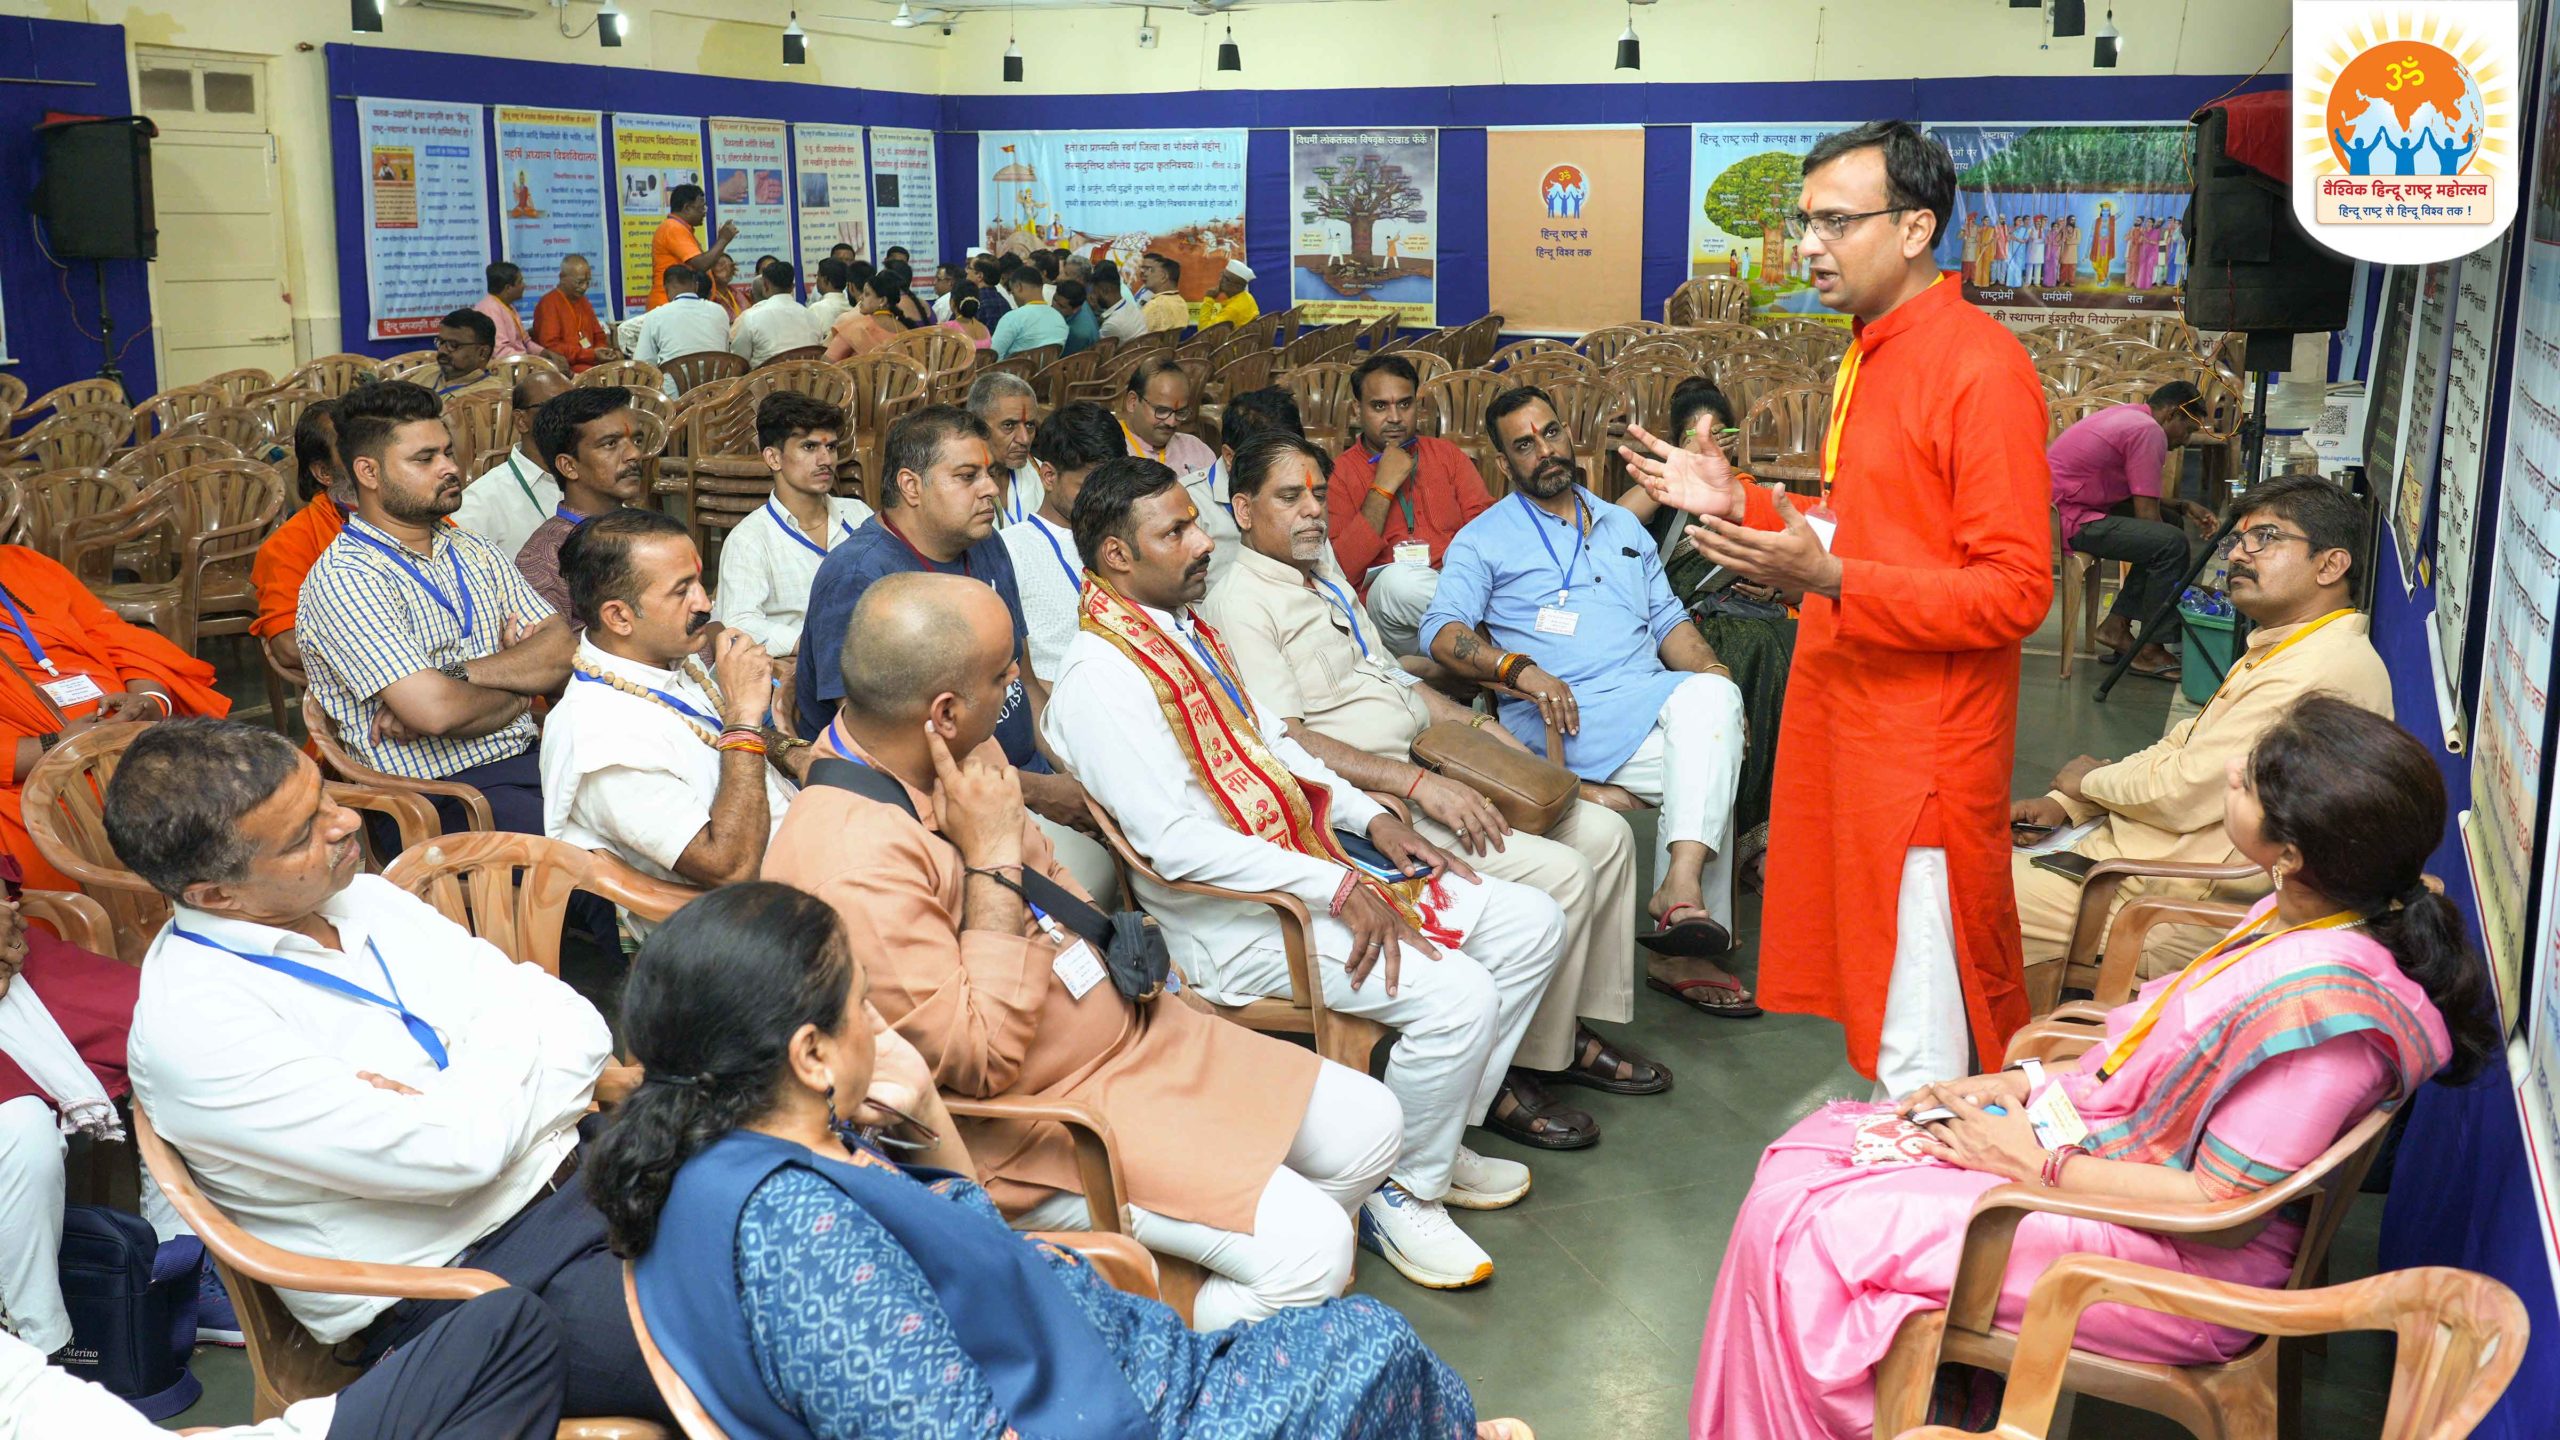 Devout Hindus carefully understanding the importance of organising events through the medium of Mandir Mahasangh